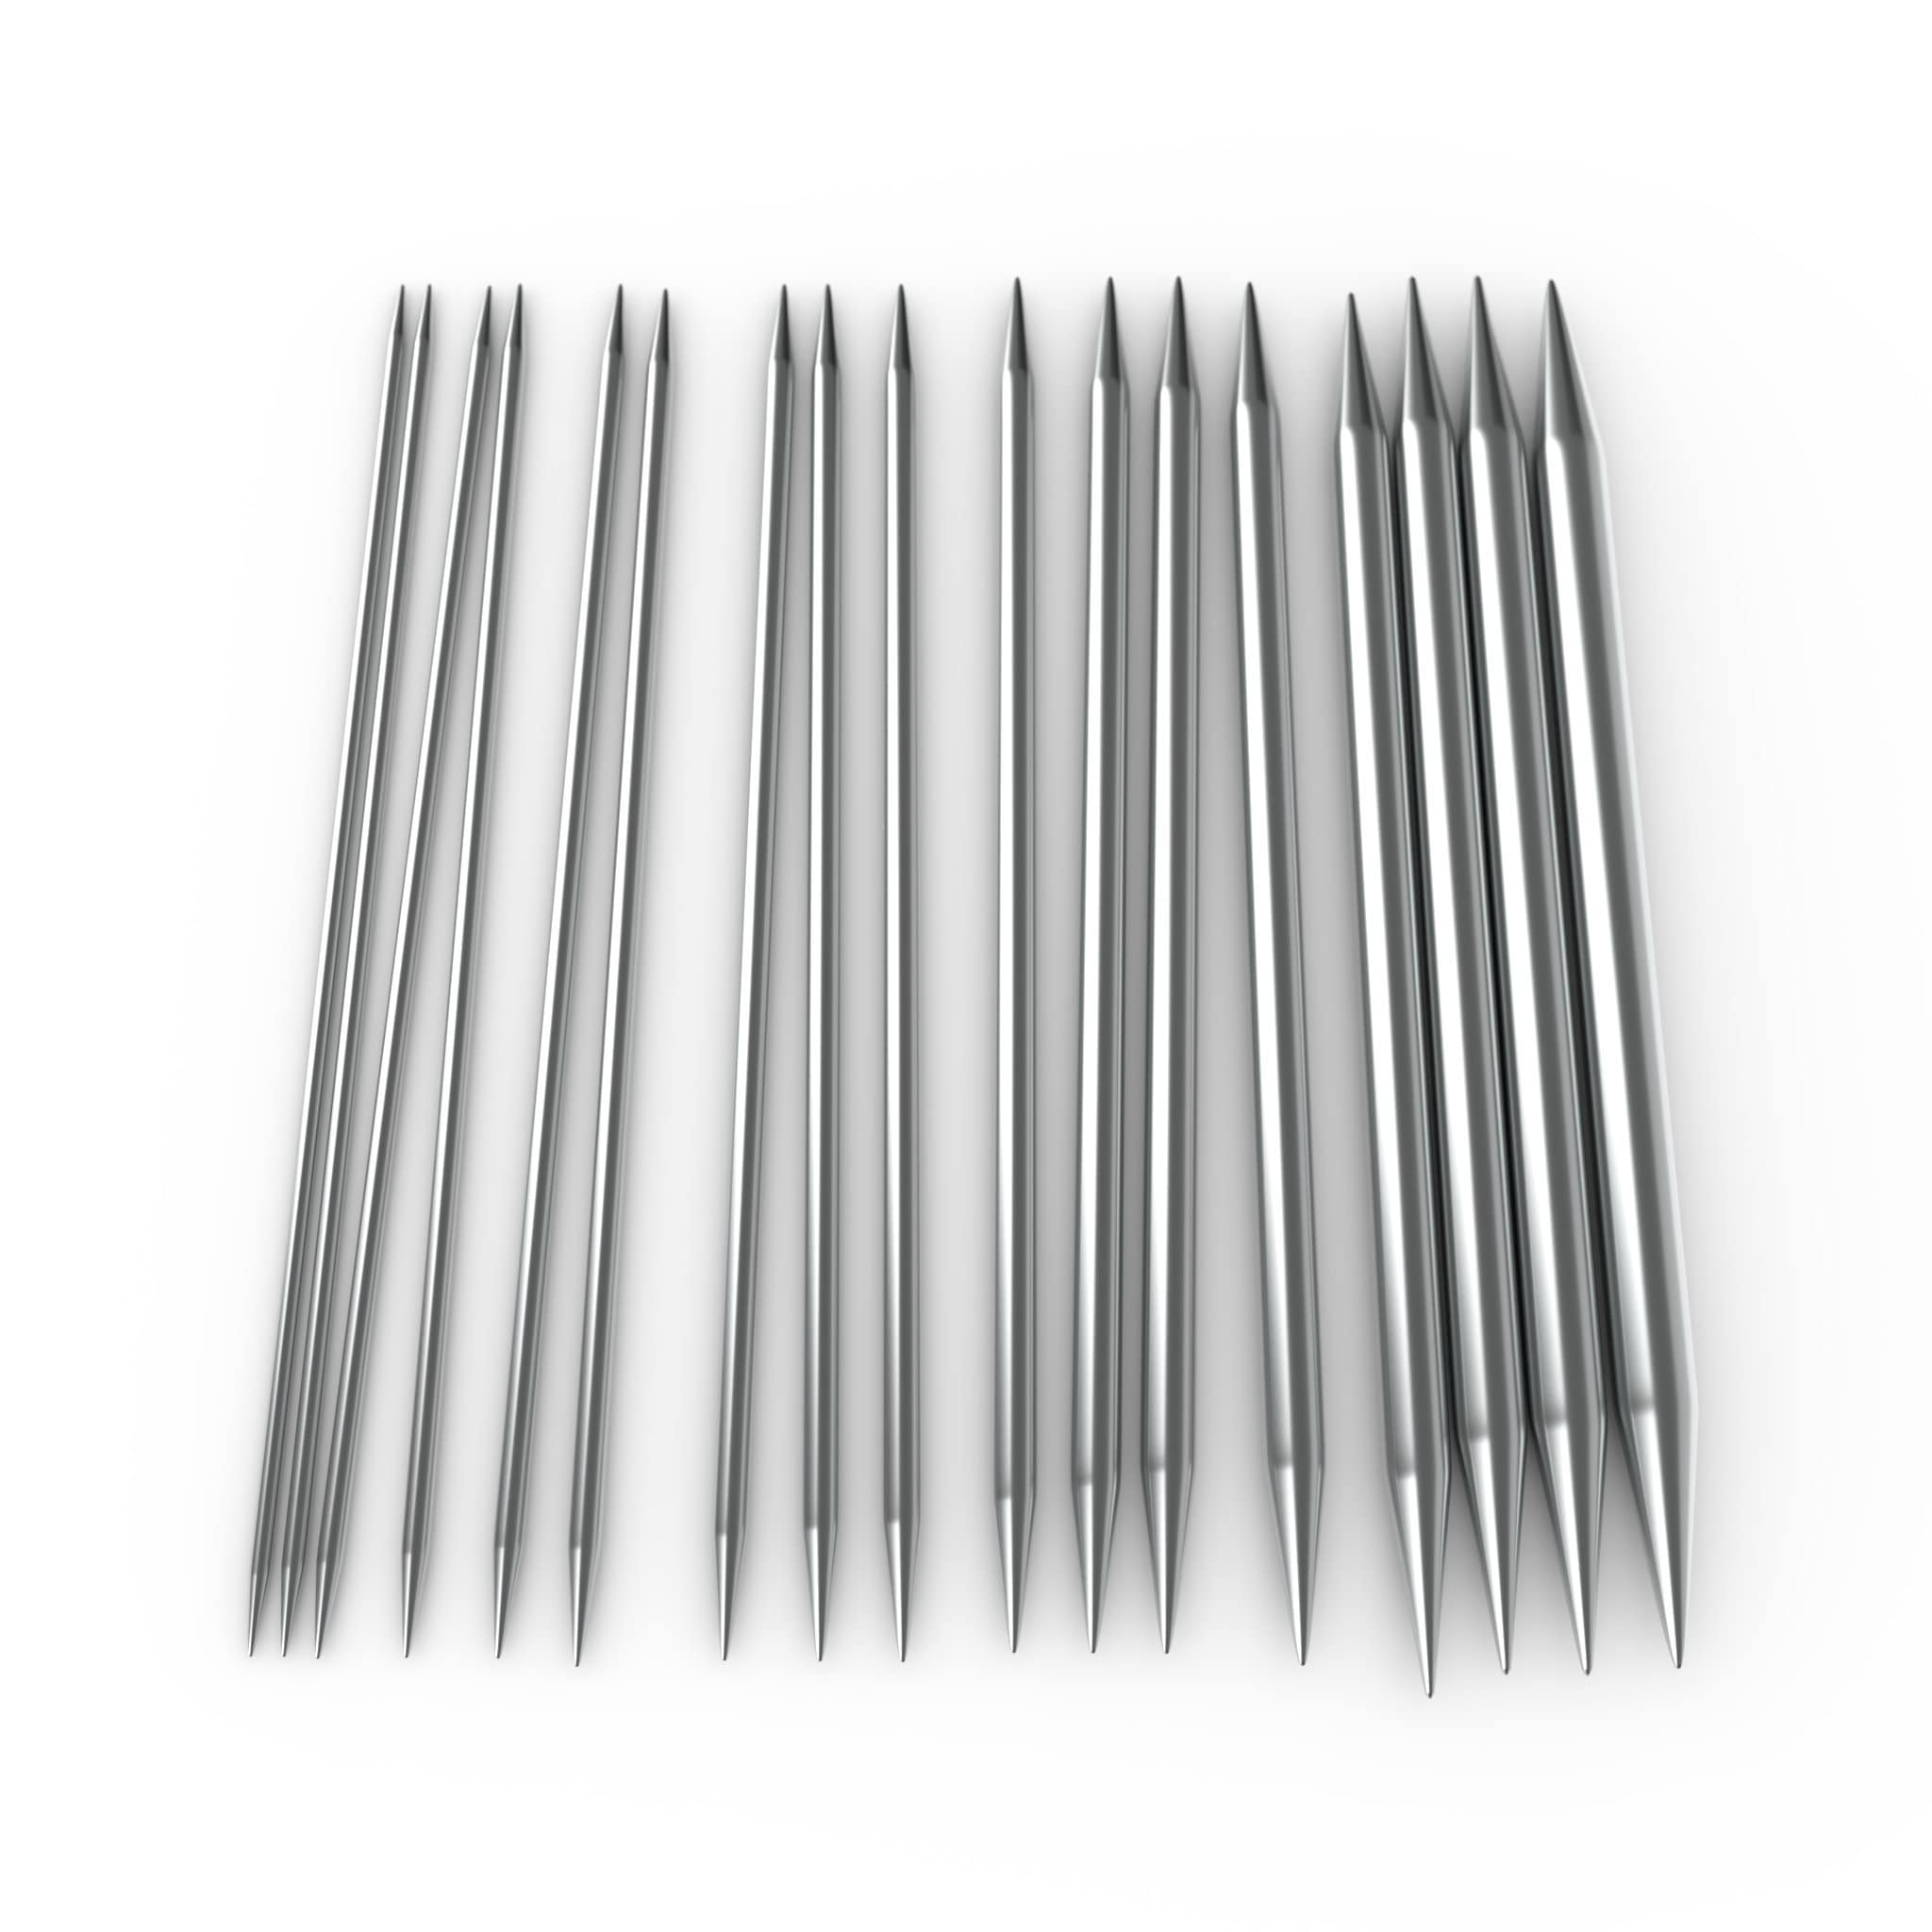 Bamboo Knitting Needles, Individual Single Point Knitting Needles